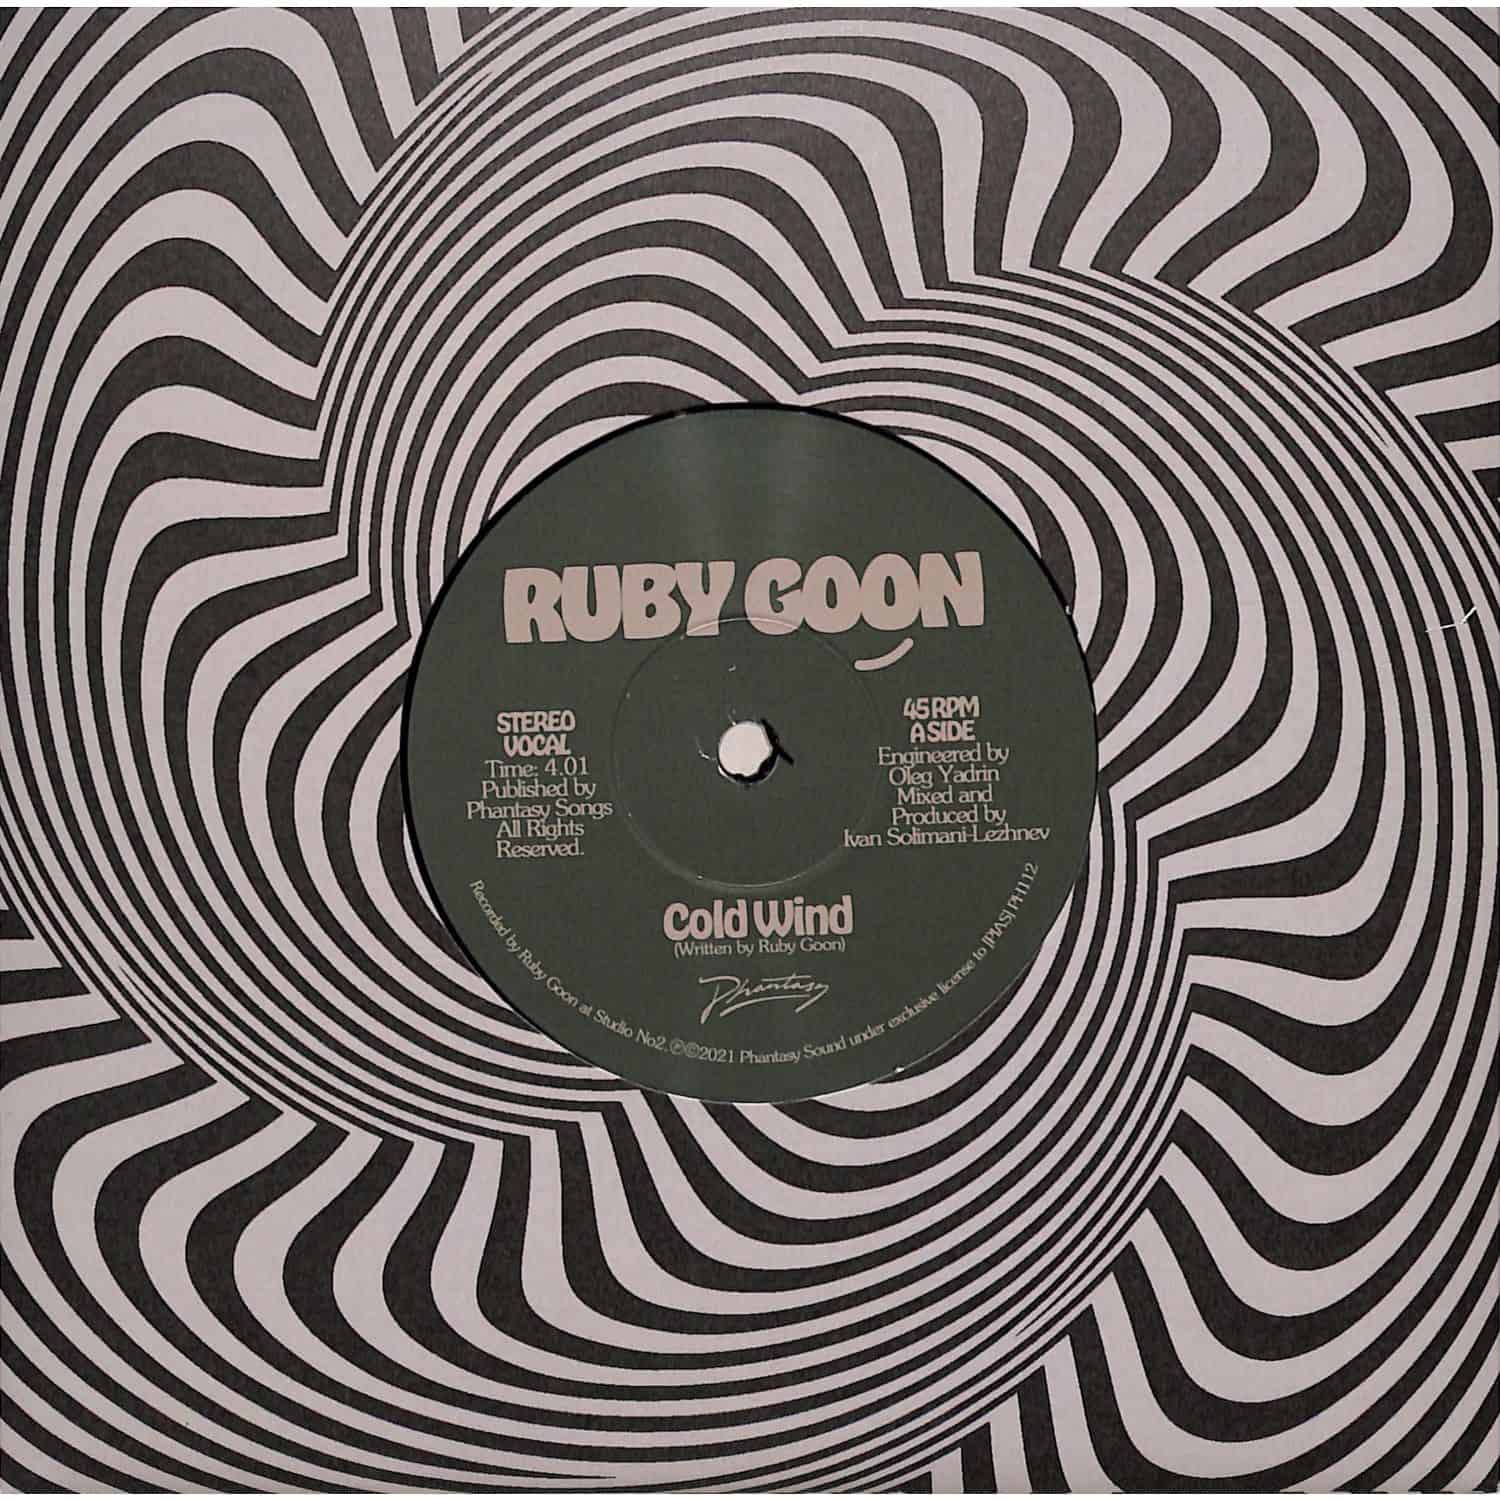 Ruby Goon - COLD WIND / LEECH 